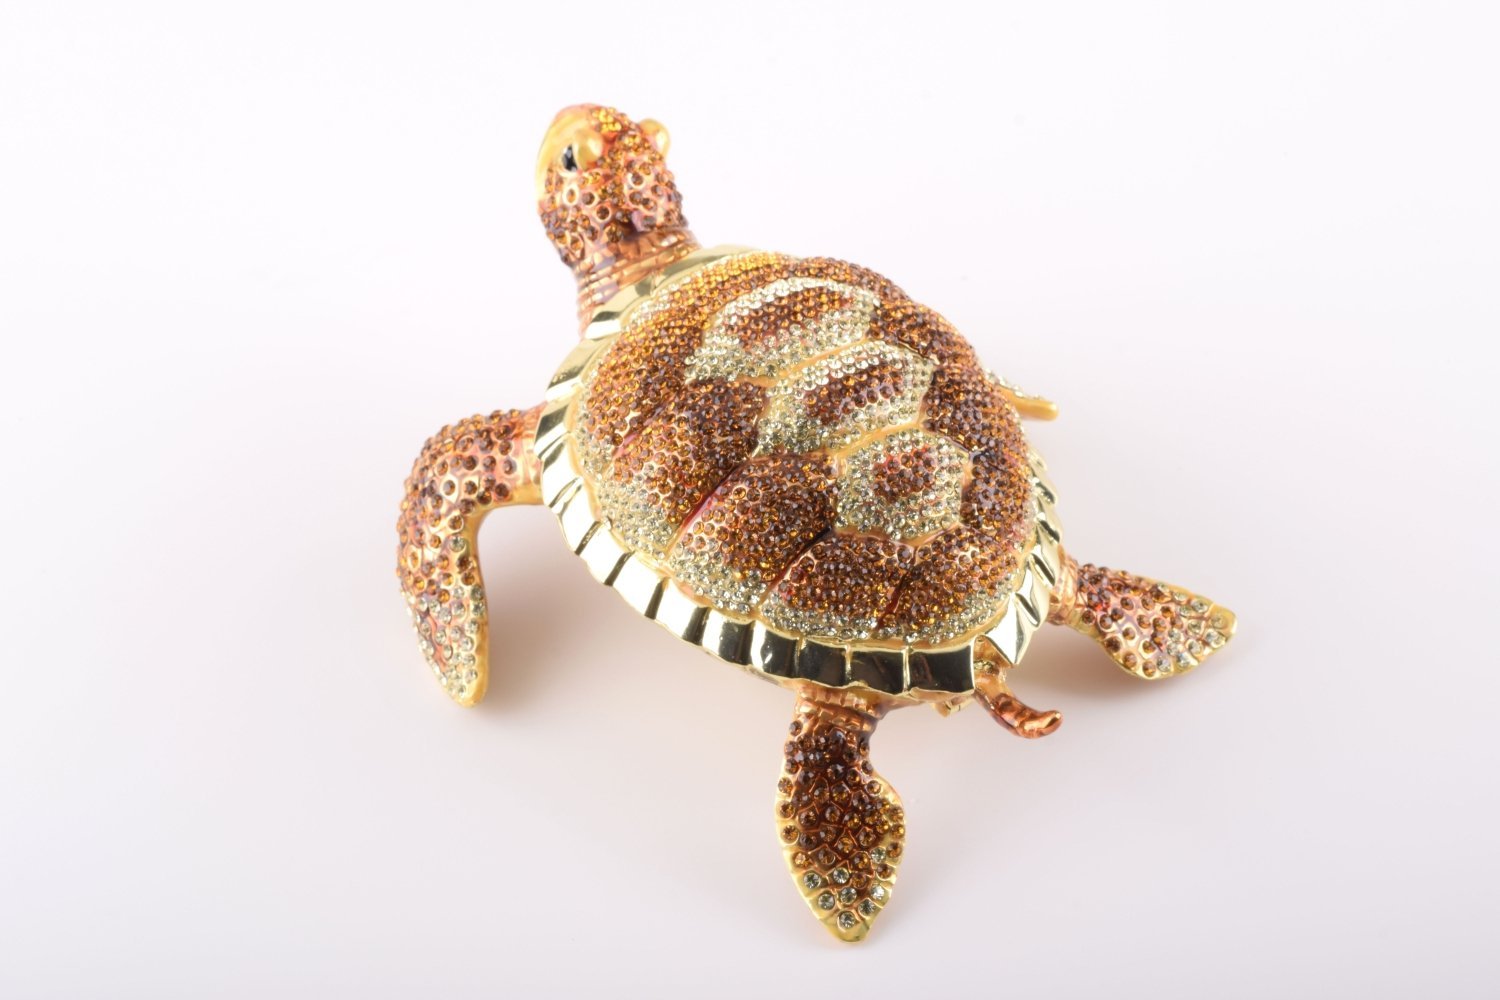 Keren Kopal Large Brown Sea Turtle  215.00